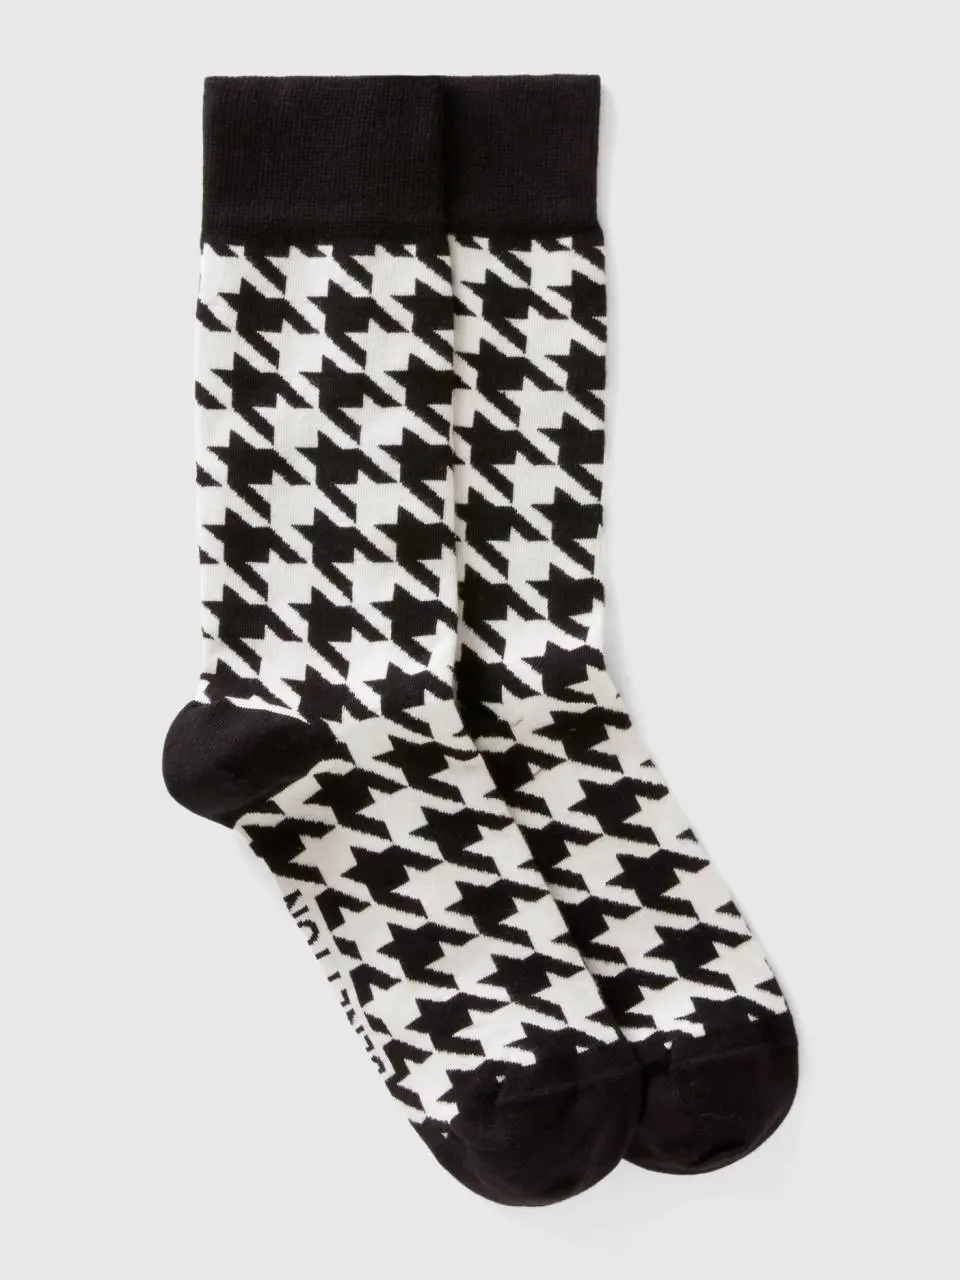 Benetton black and white houndstooth socks. 1